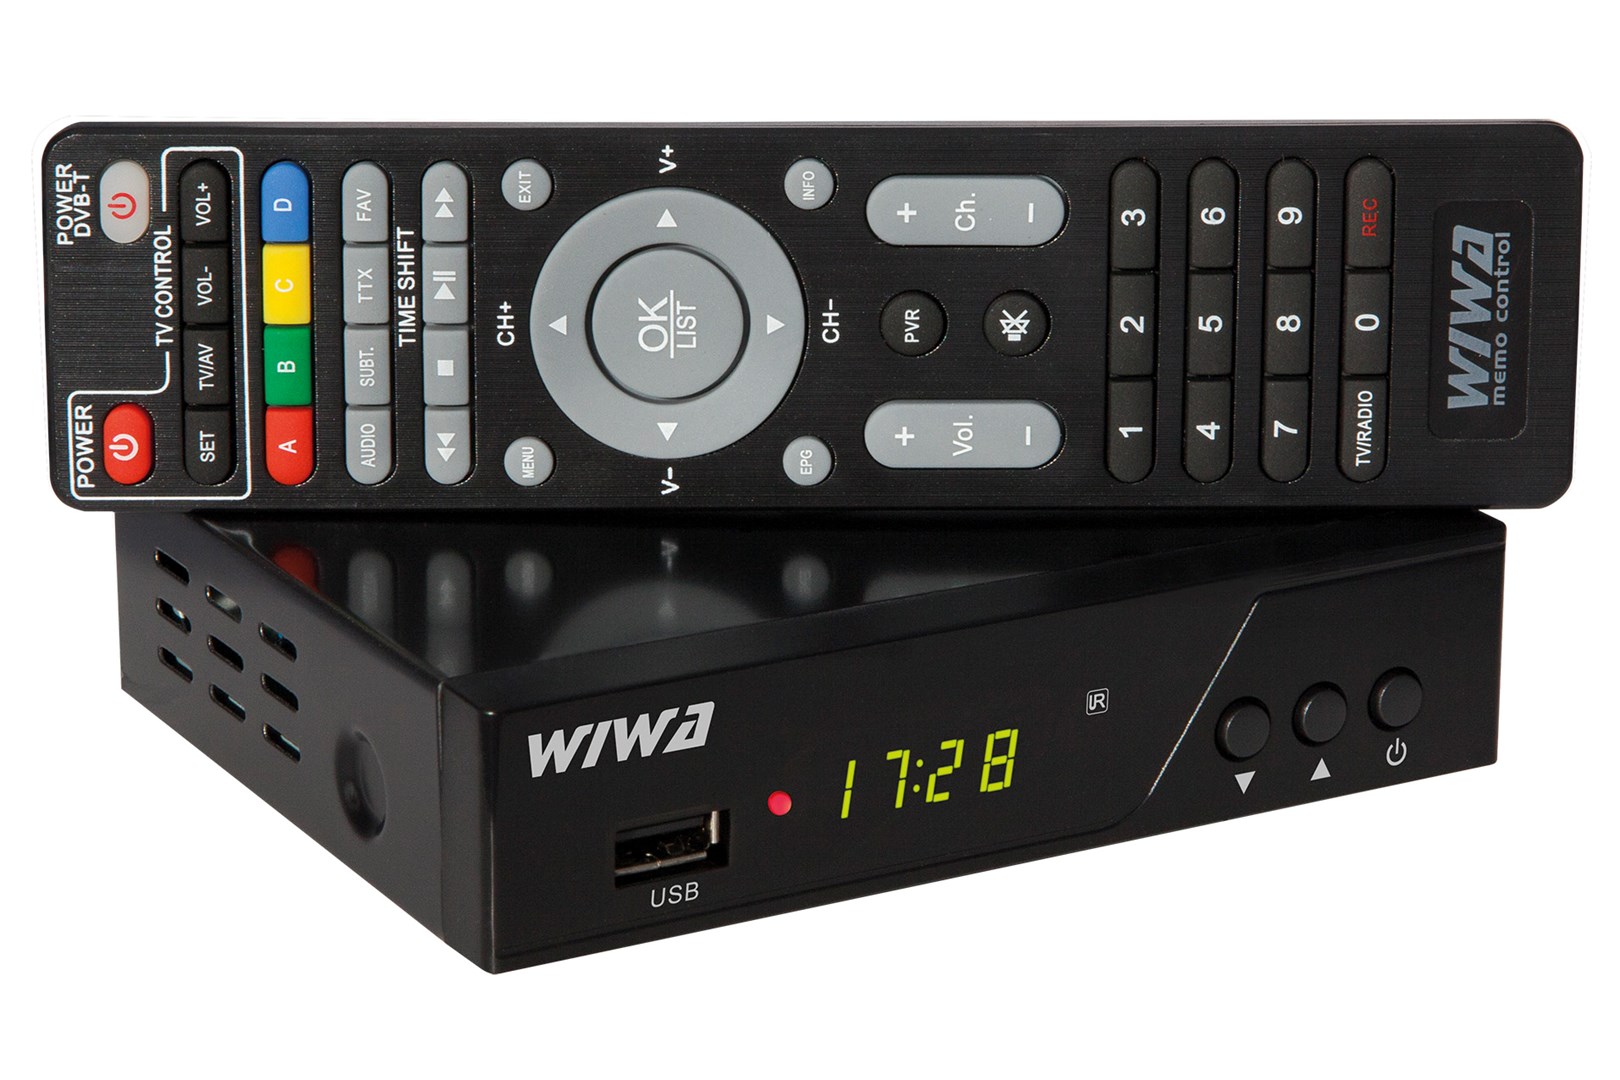 WIWA TUNER DVB-T/T2 H.265 PRO